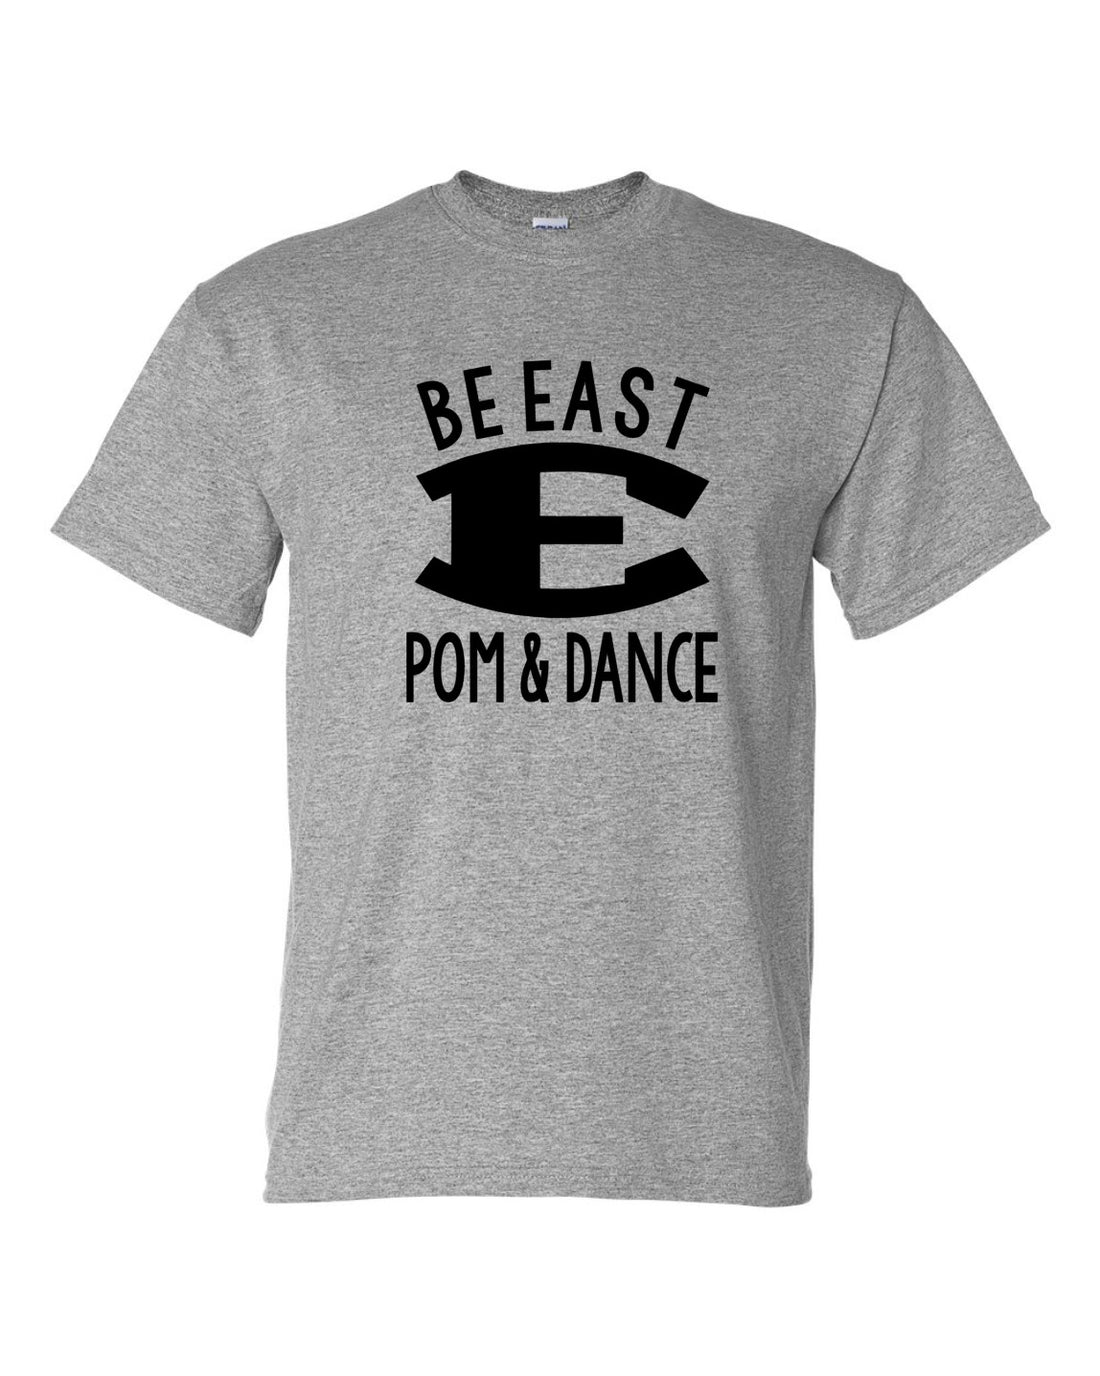 Be East Pom & Dance Tee